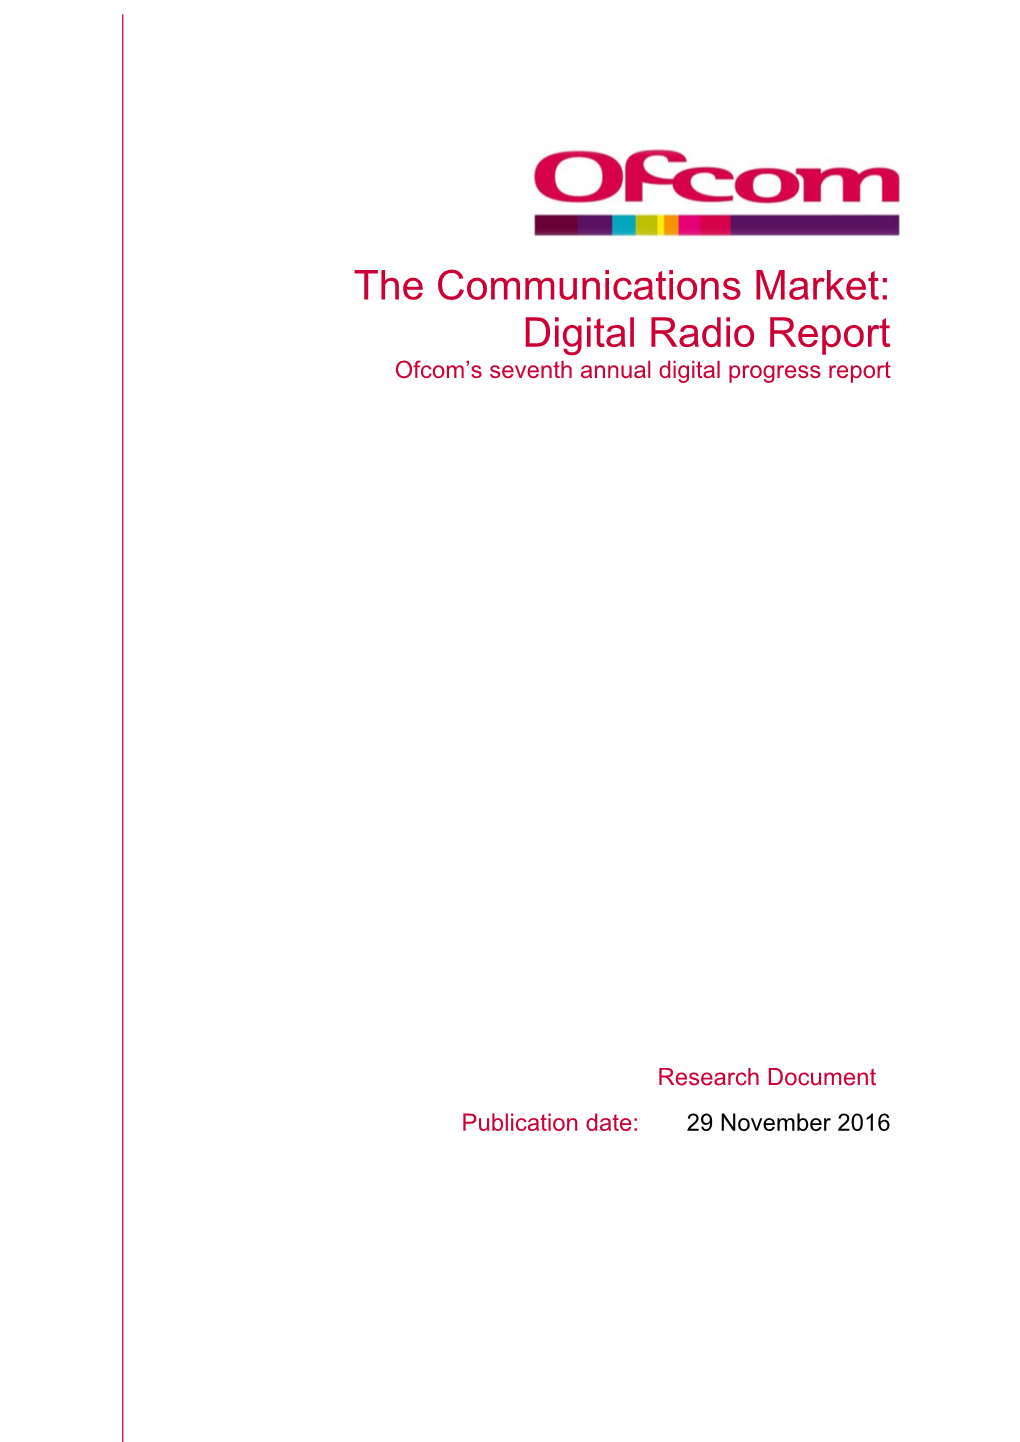 The Communications Market: Digital Radio Report 2016